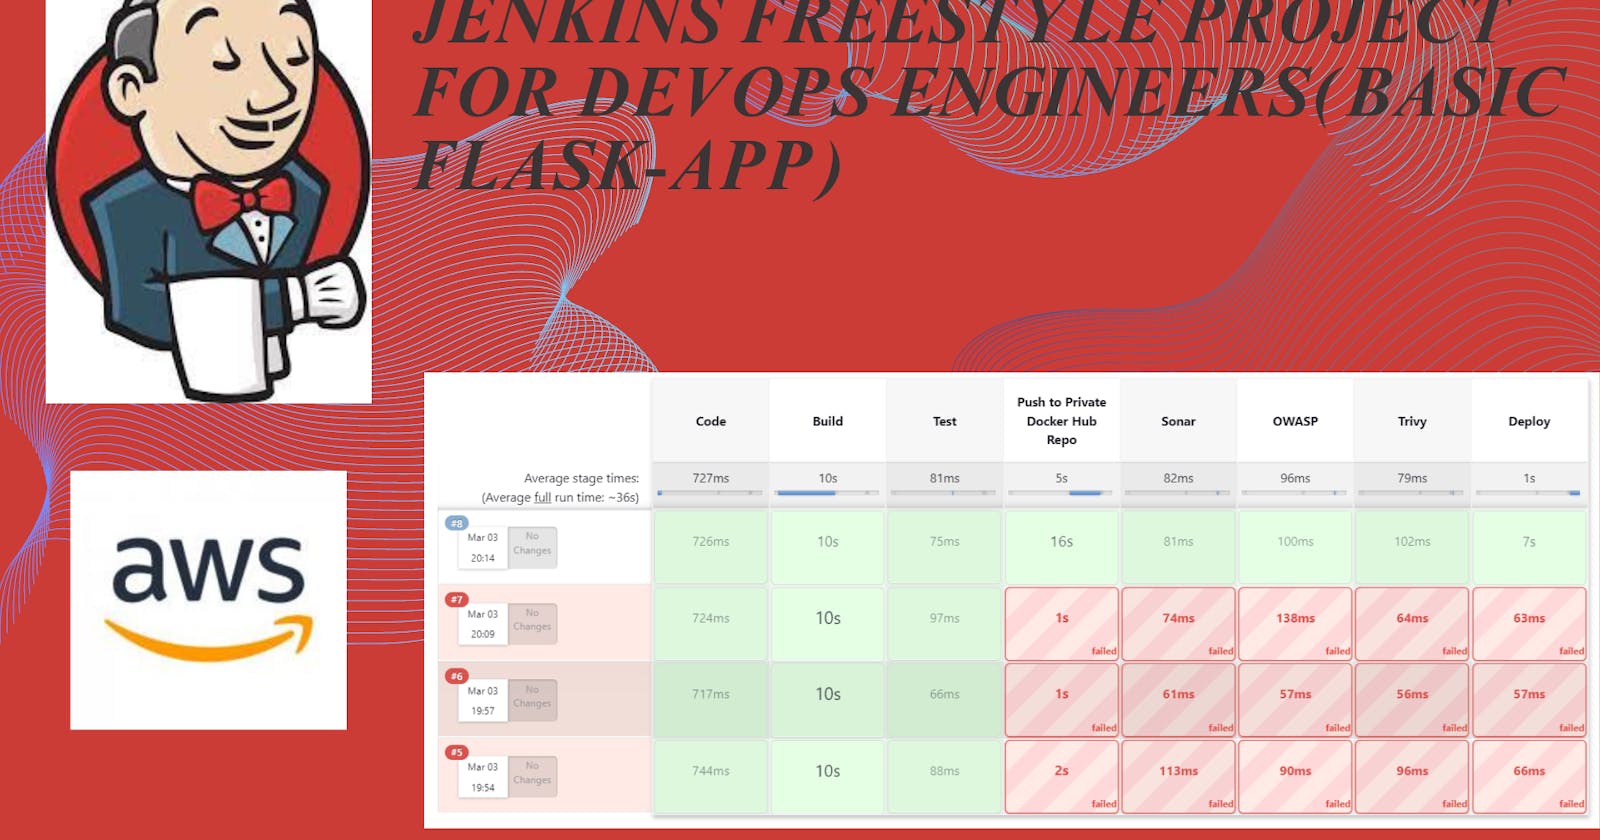 Jenkins Freestyle Project for DevOps Engineers(Basic Flask-App).